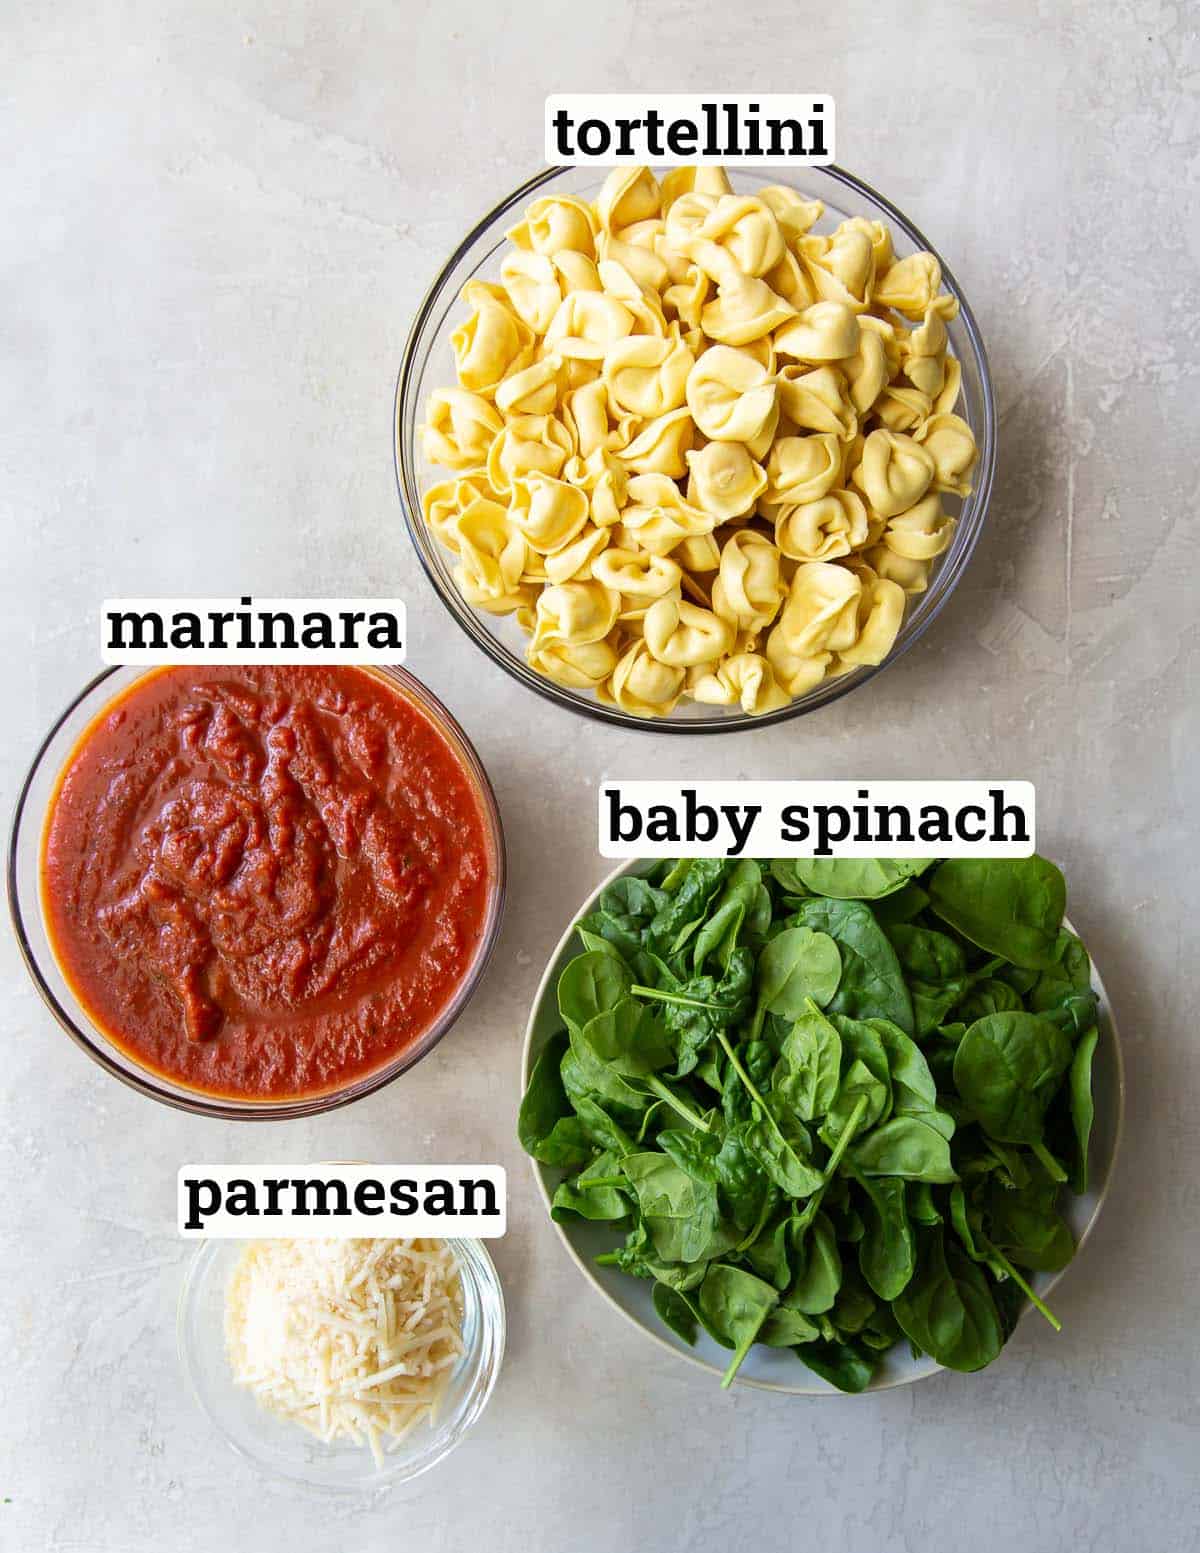 The ingredients to make Spinach Parmesan Tortellini Bake